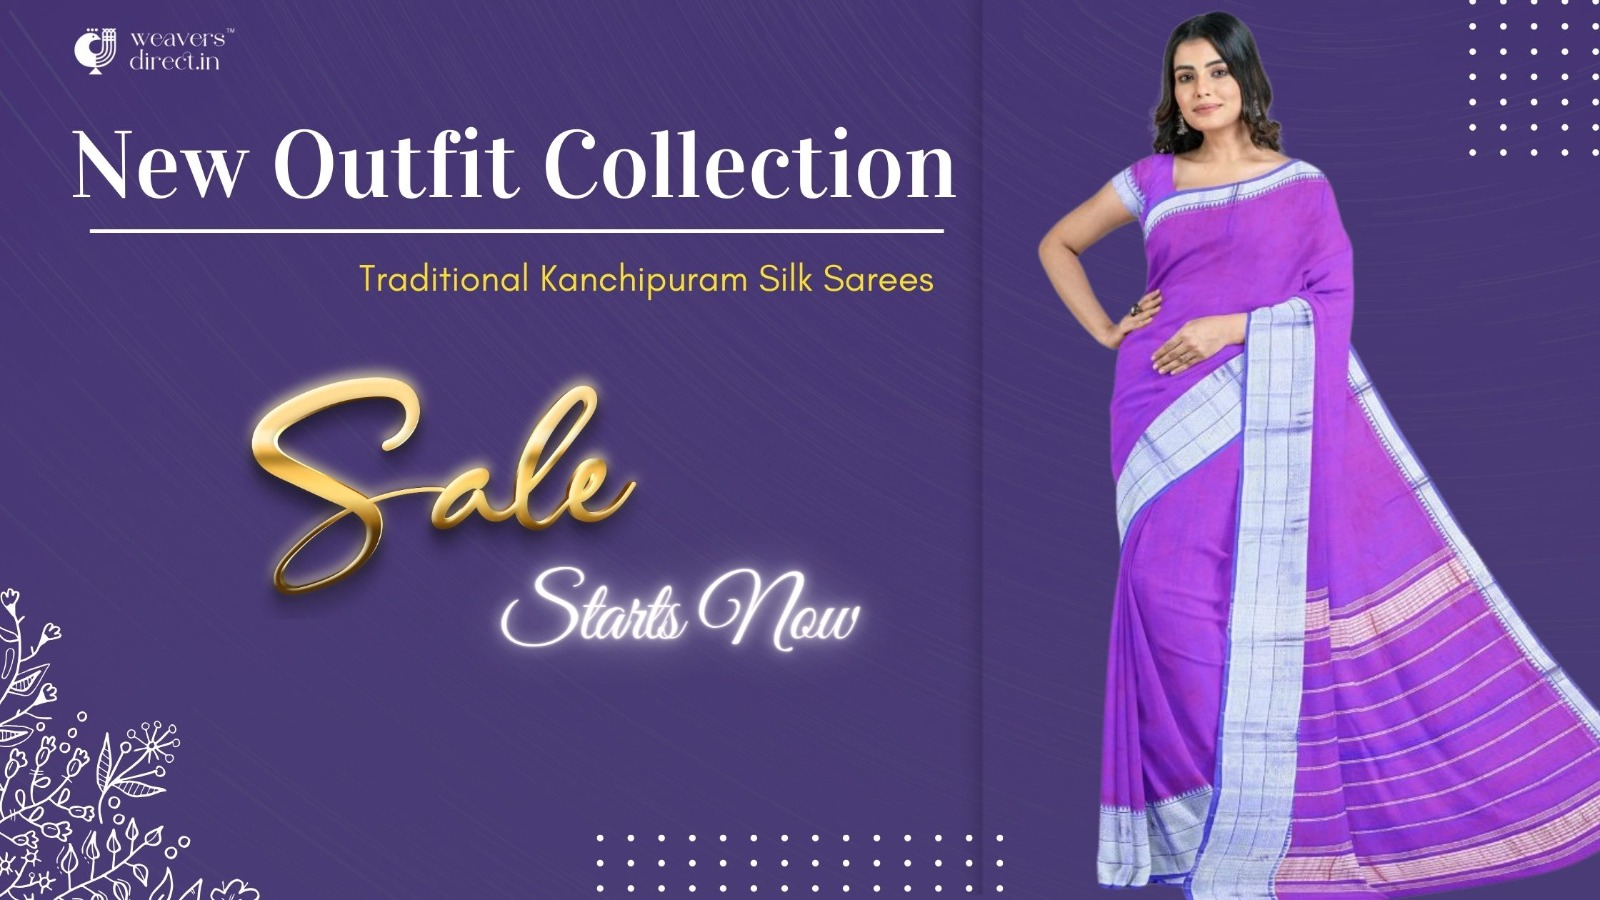 Kanchipuram Silk Sarees